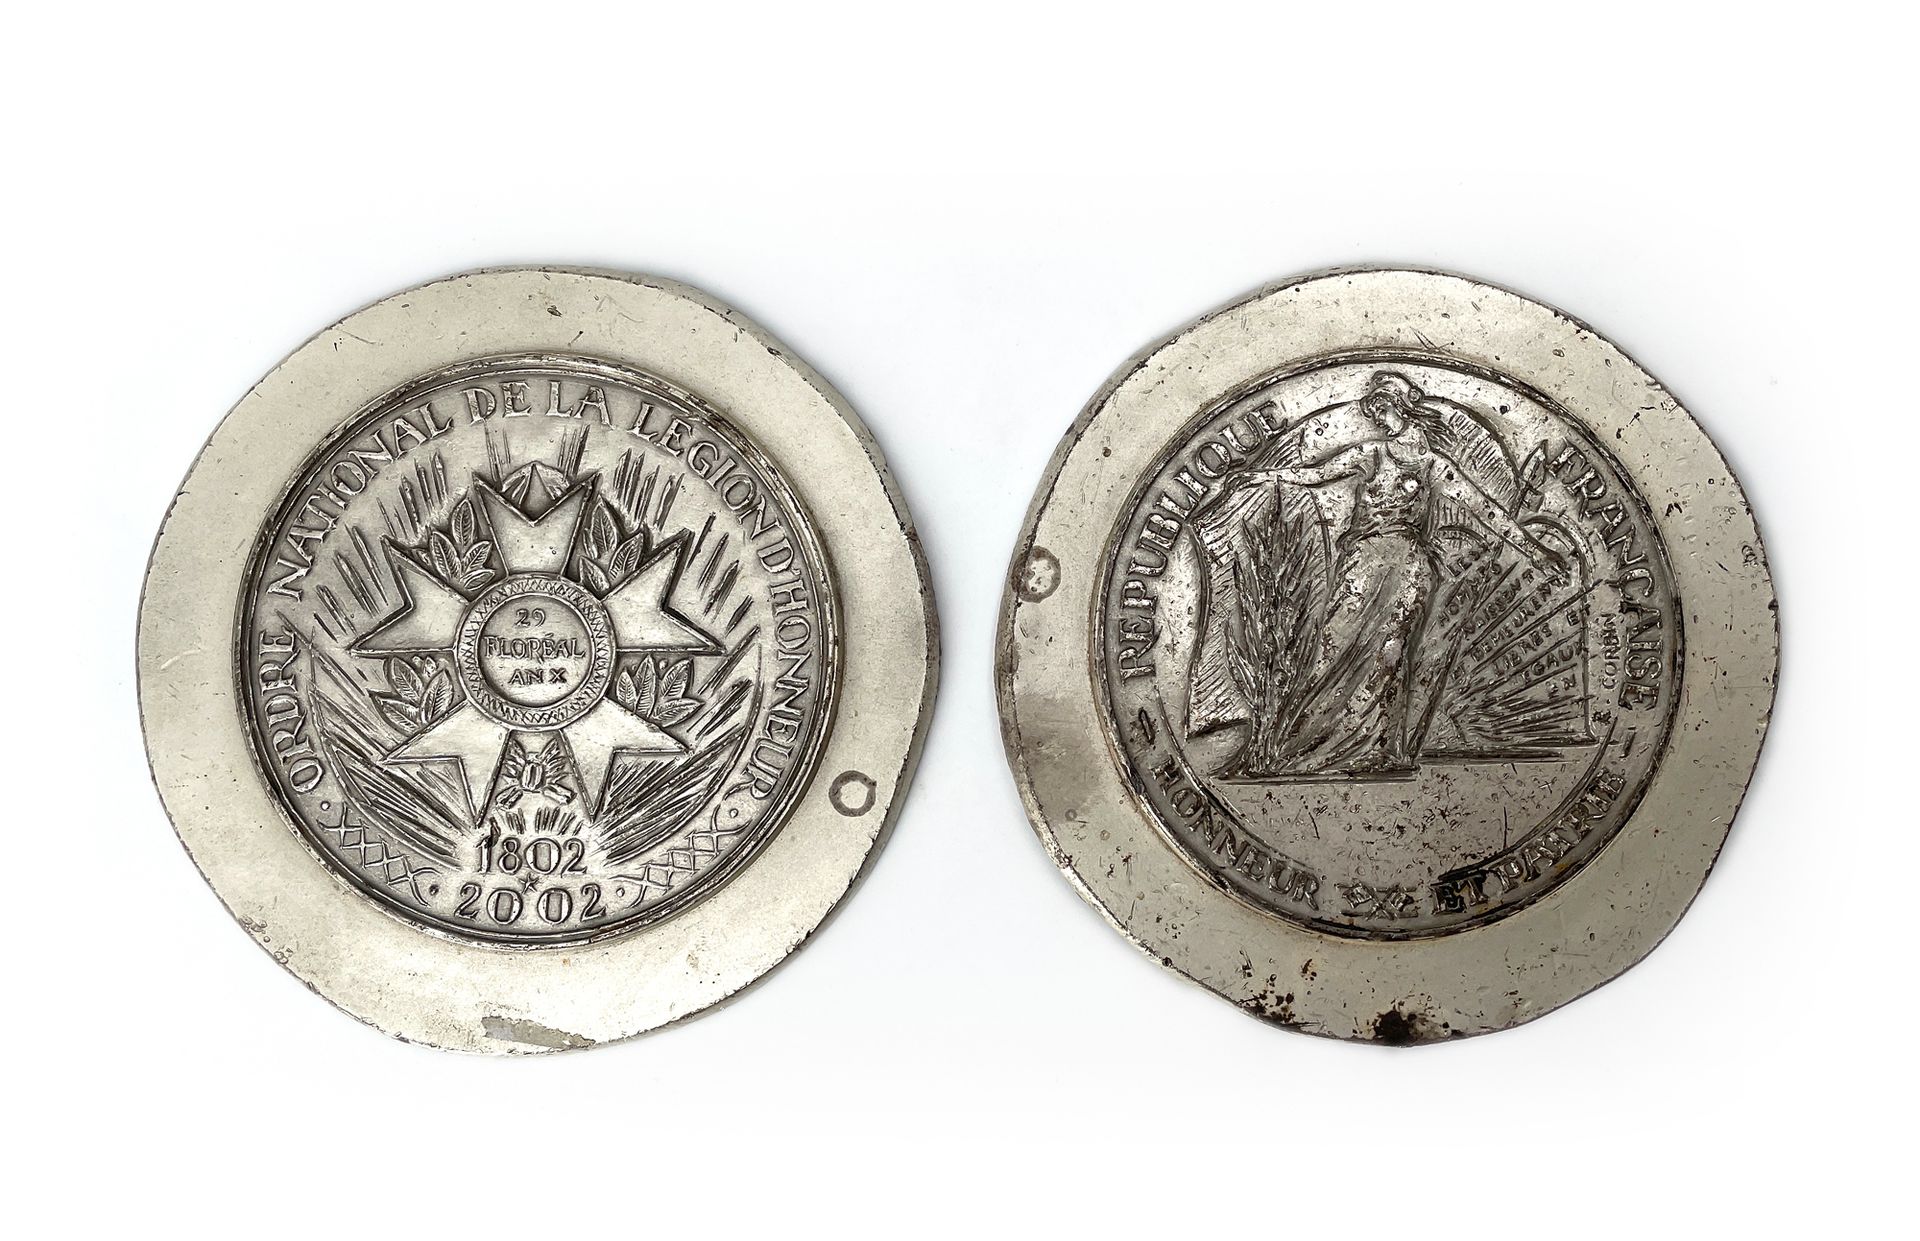 Null 法国
- 国家荣誉军团勋章。1802
- 2002
- 法兰西共和国。Honour and Patria
两幅铅印作品。
Diam 11 cm。